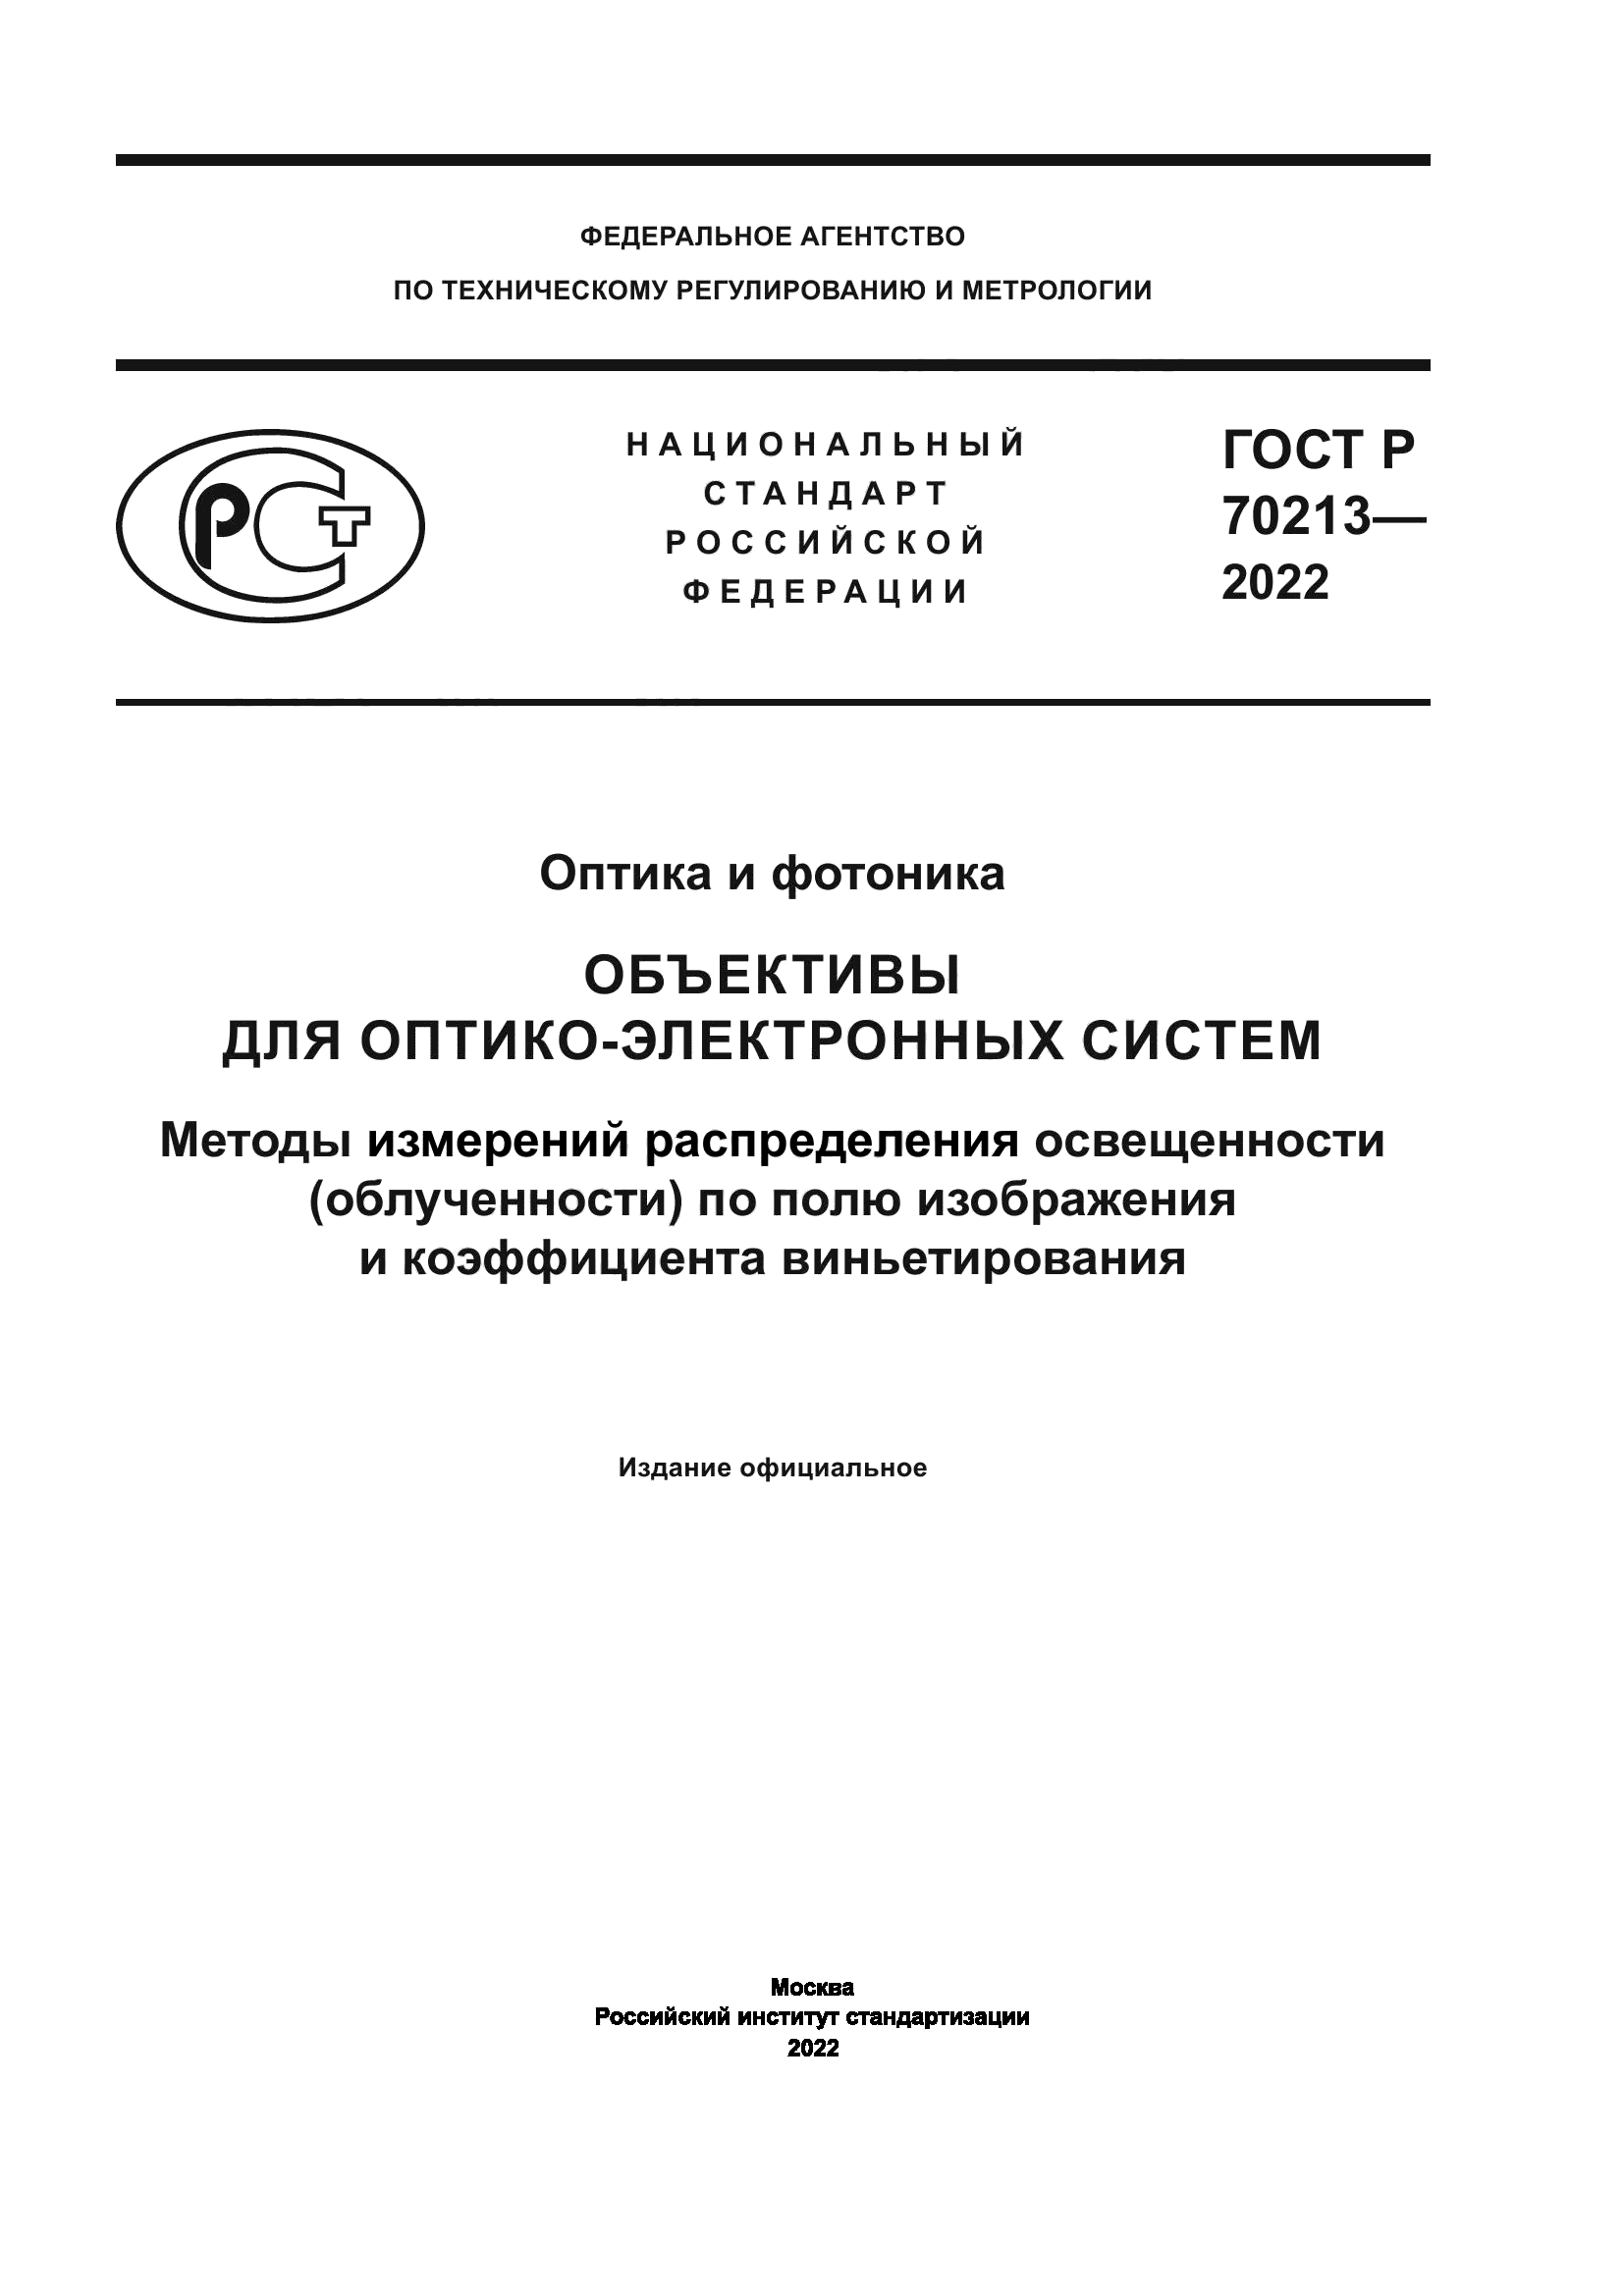 ГОСТ Р 70213-2022